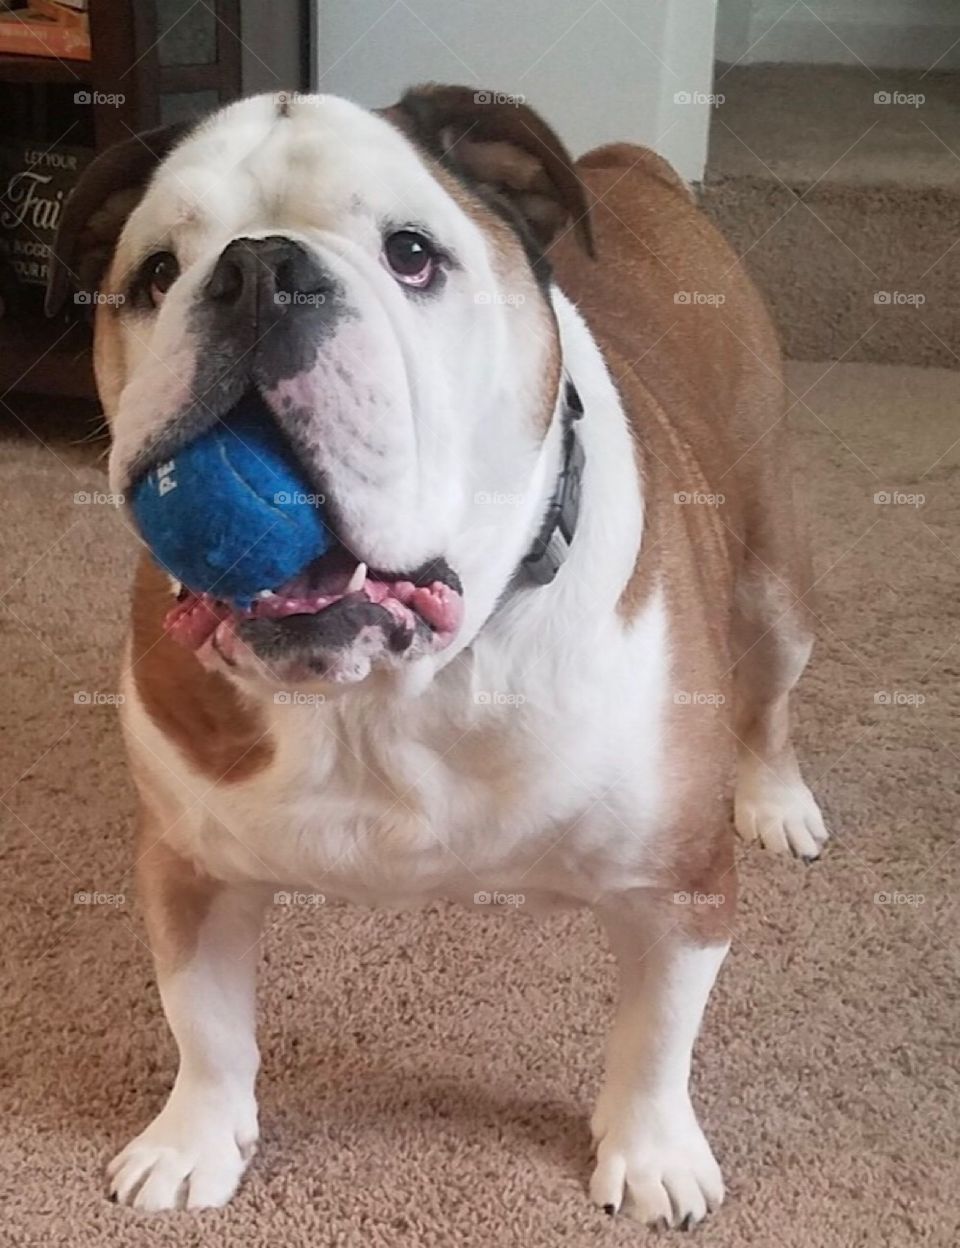 English bulldog playing with a blue tennis ball 